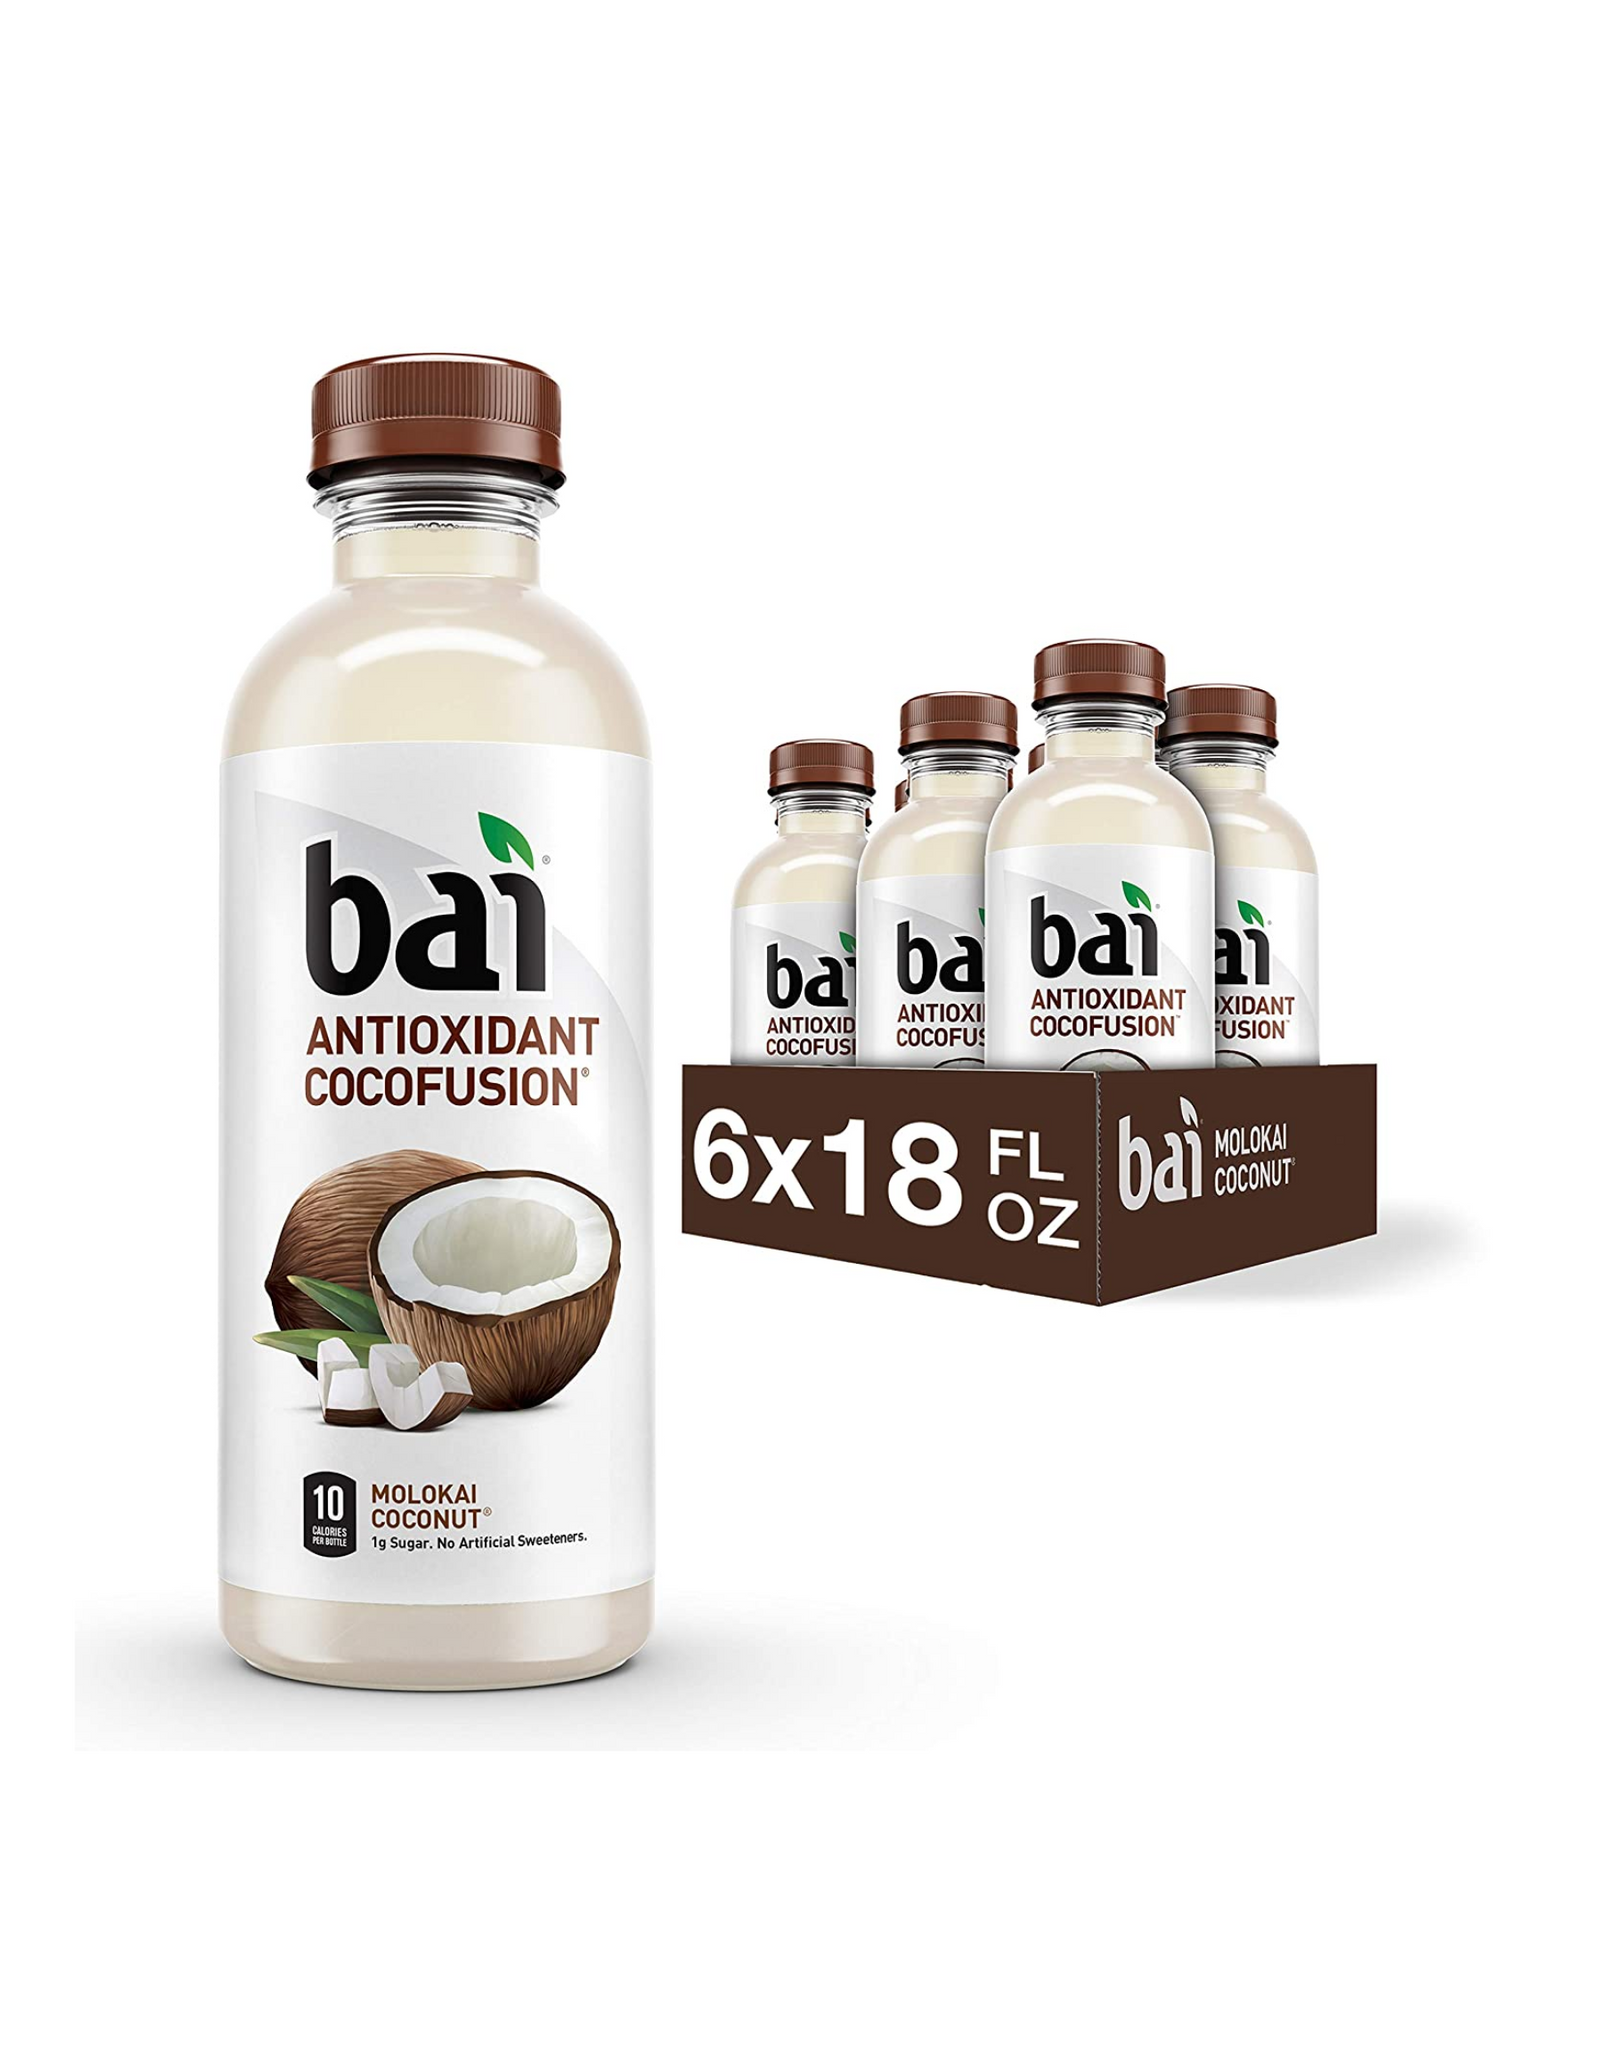 Bai Coconut Flavored Water, Antioxidant Cocofusion, Molokai Coconut, 18 fl oz (Pack of 6)